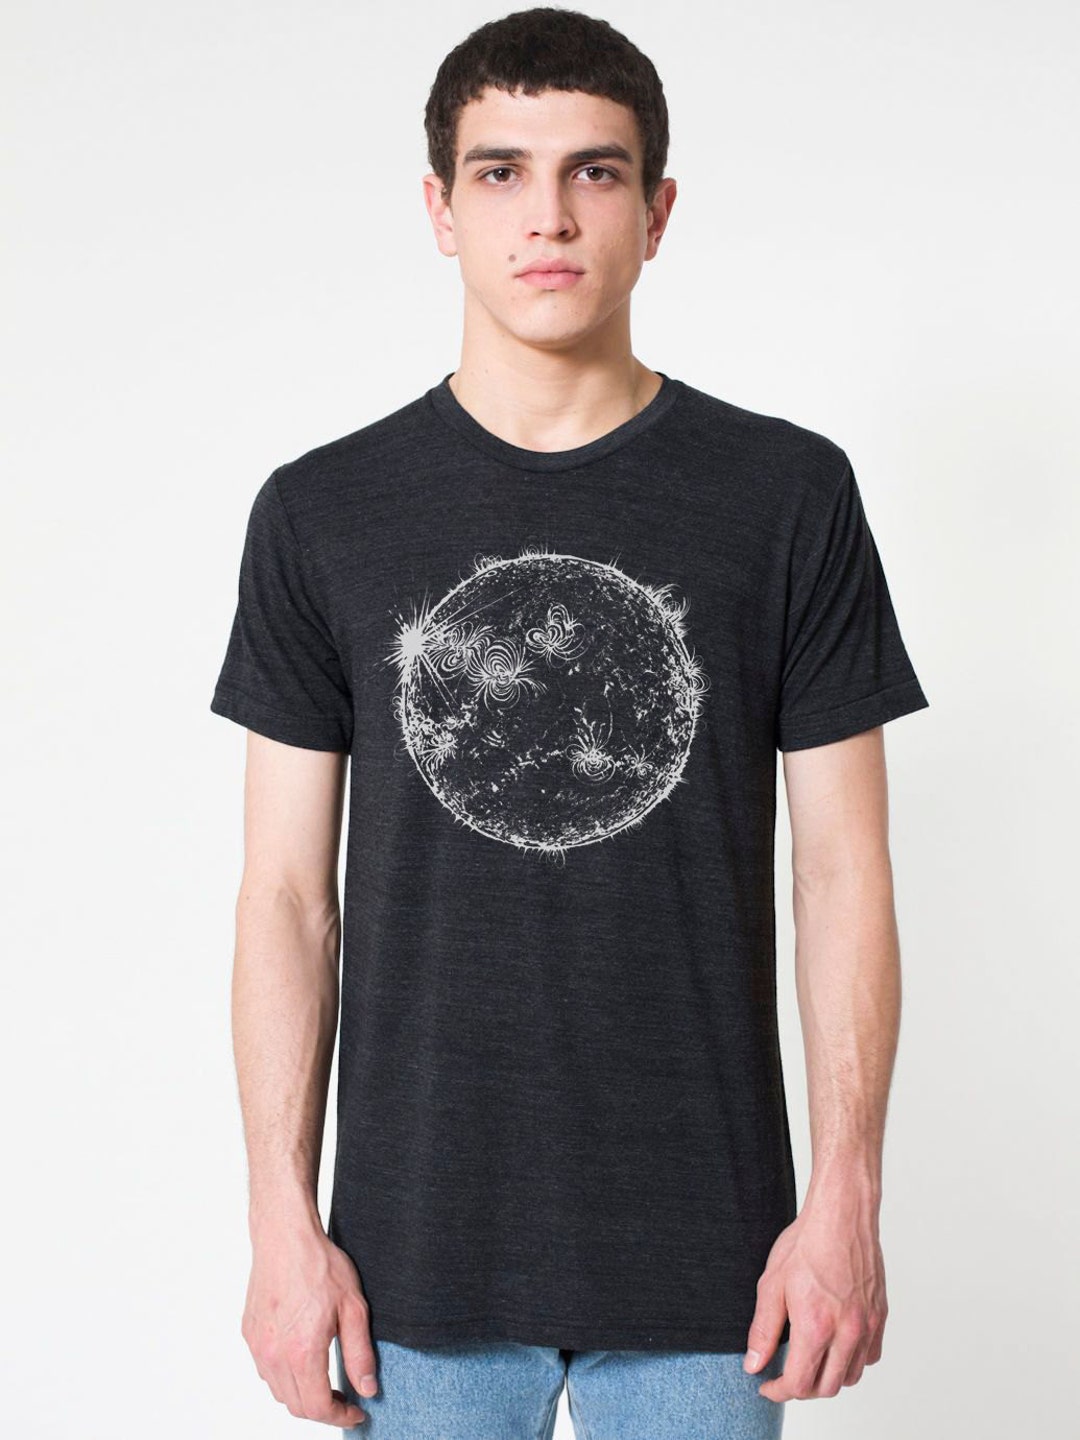 Sun Shirt, Space Shirts, Science Tshirt, Mens Astronomy Shirt, Unisex ...